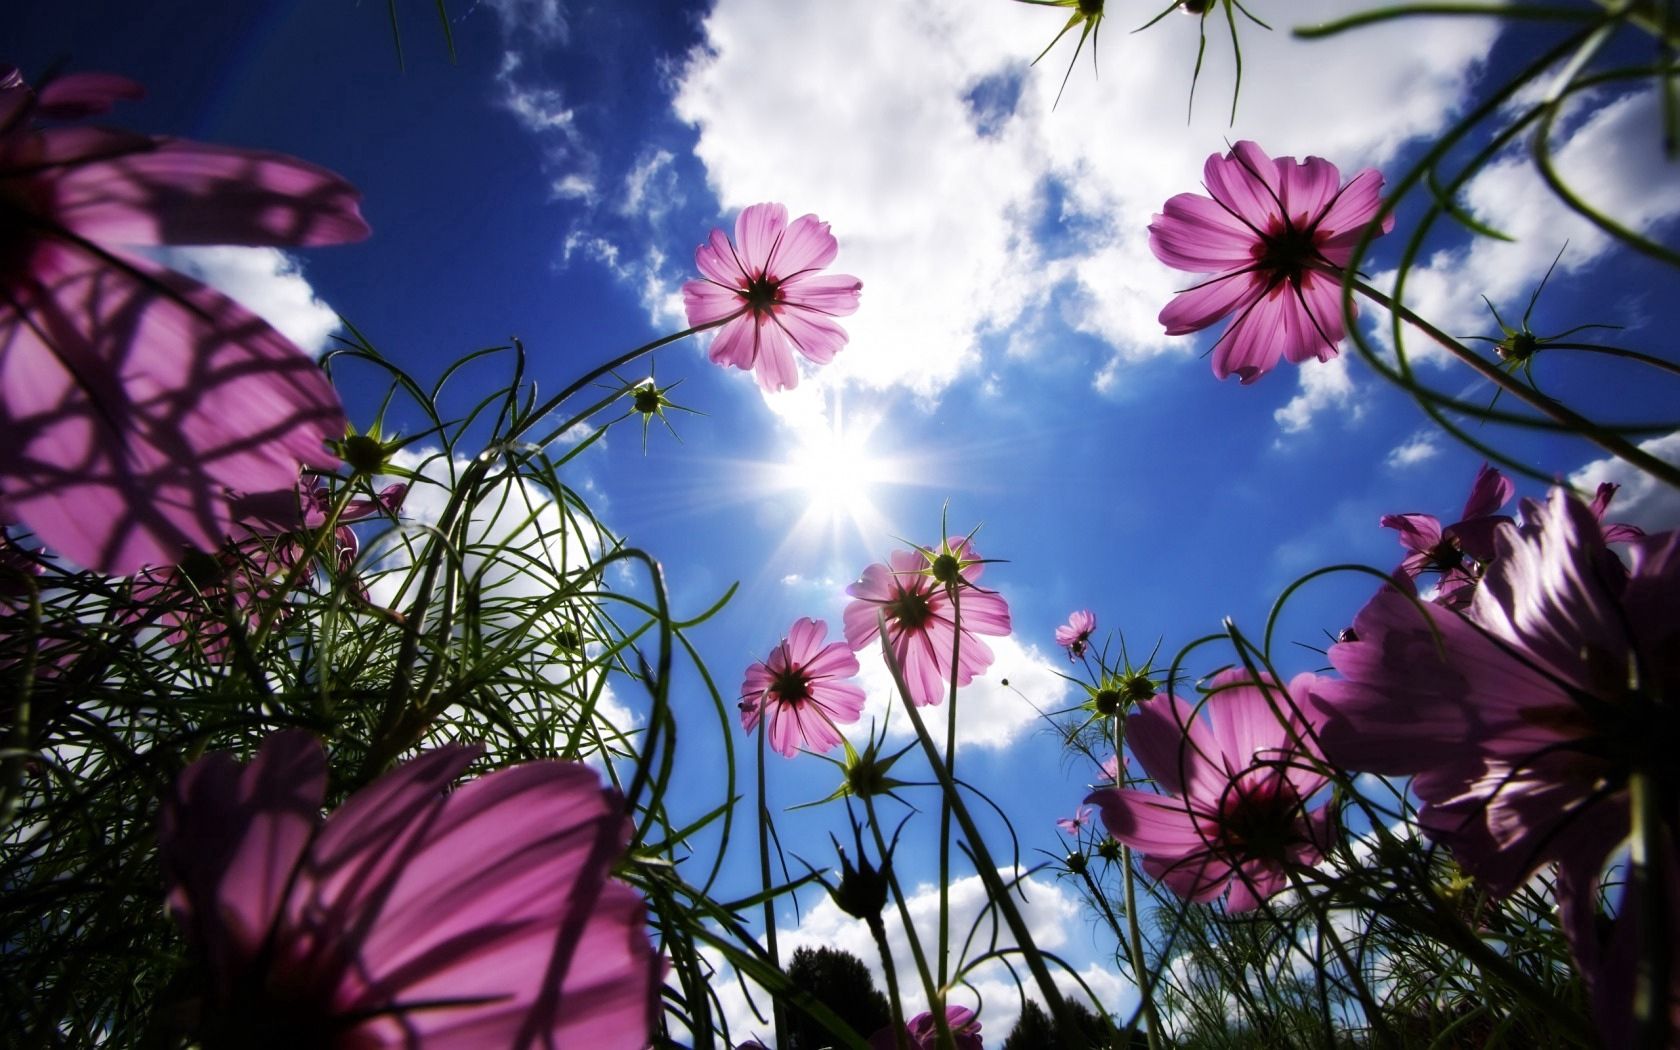 sun, beams, nature, flowers, grass, sky, summer, rays, day